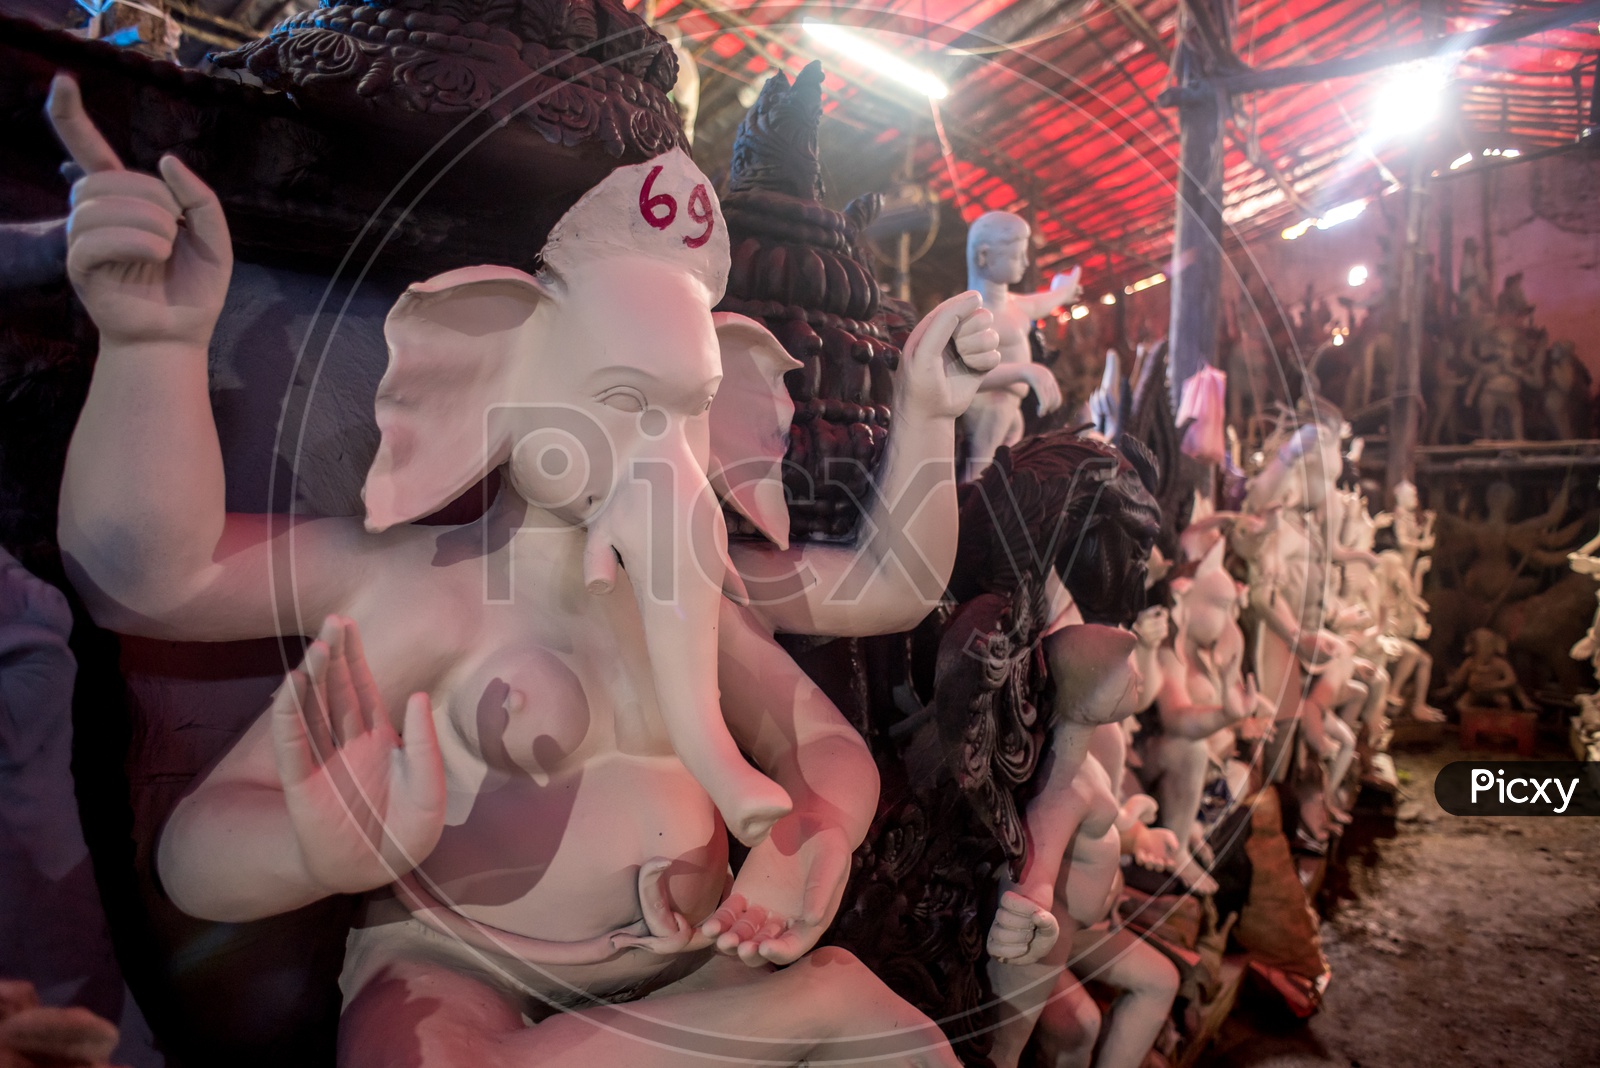 Ganesh idols